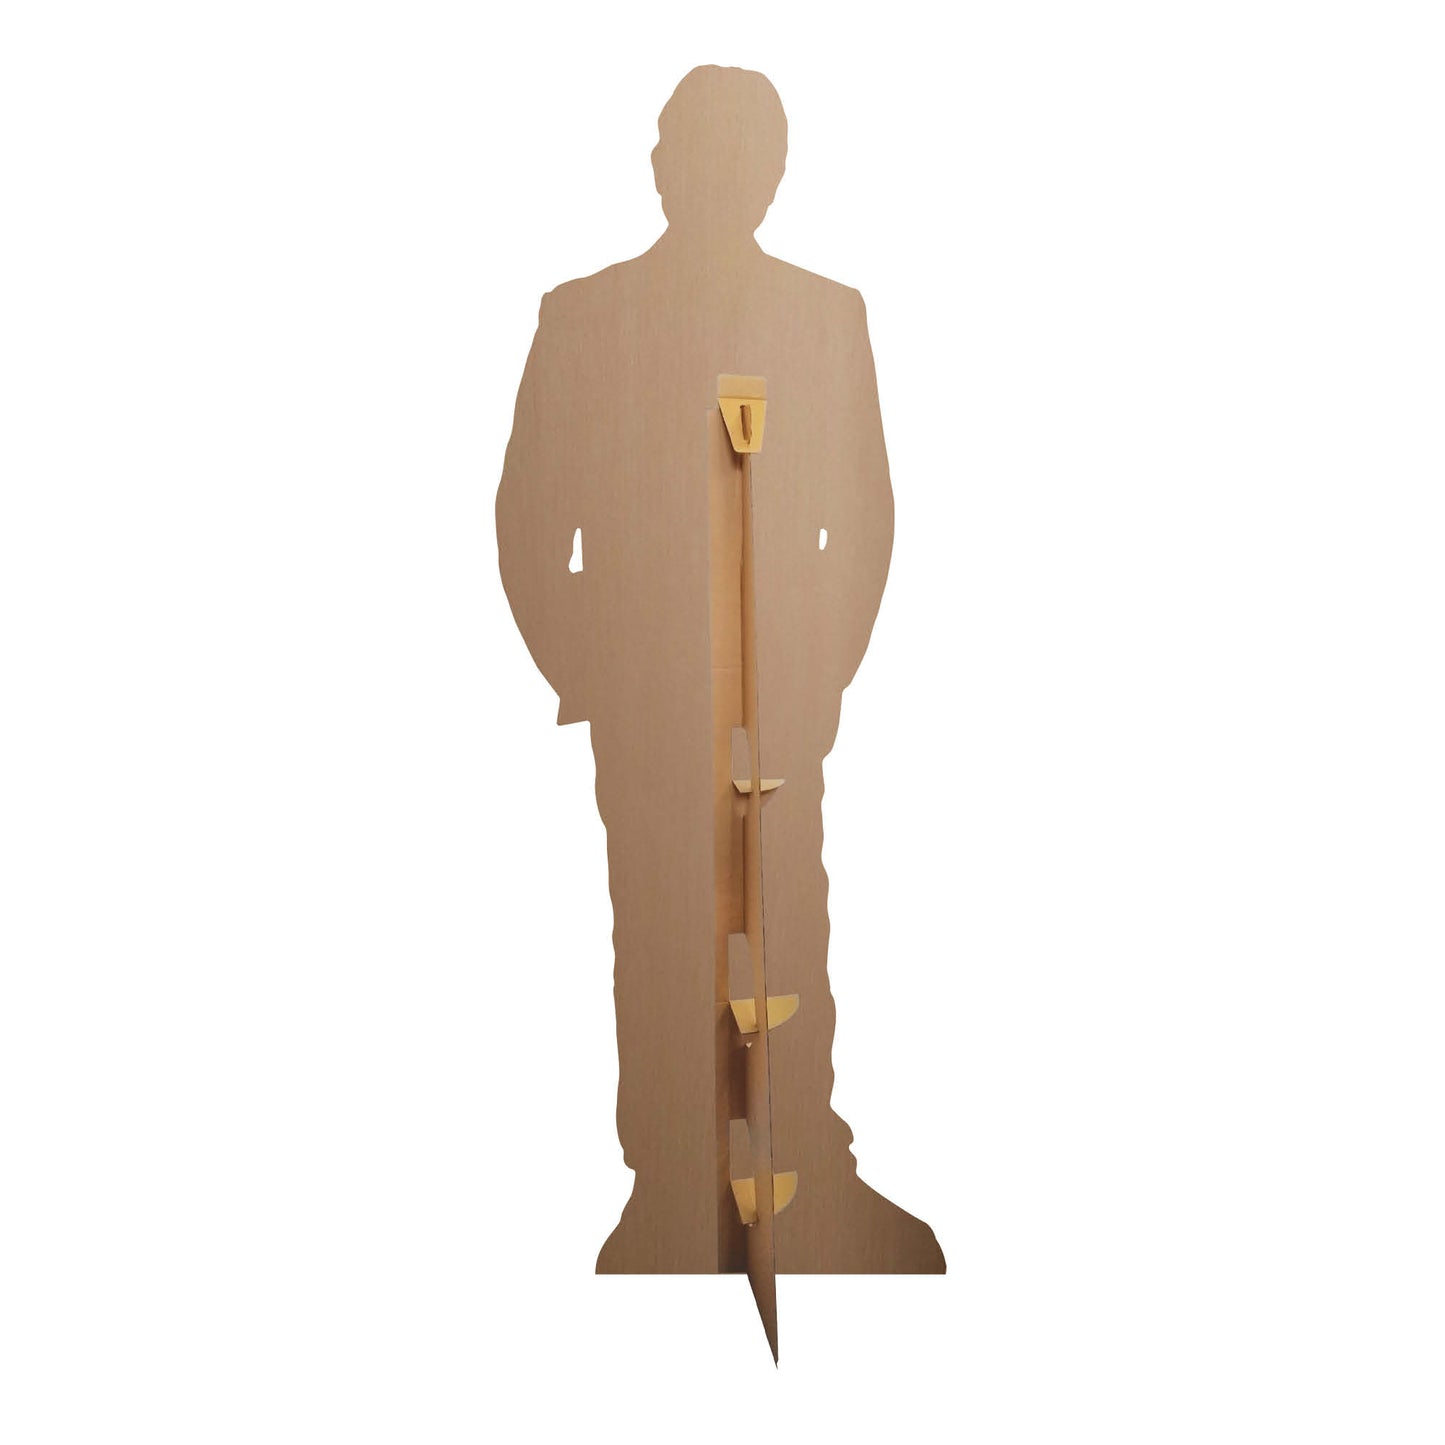 CS981 Sam Neill Height 184cm Lifesize Cardboard Cut Out With Mini